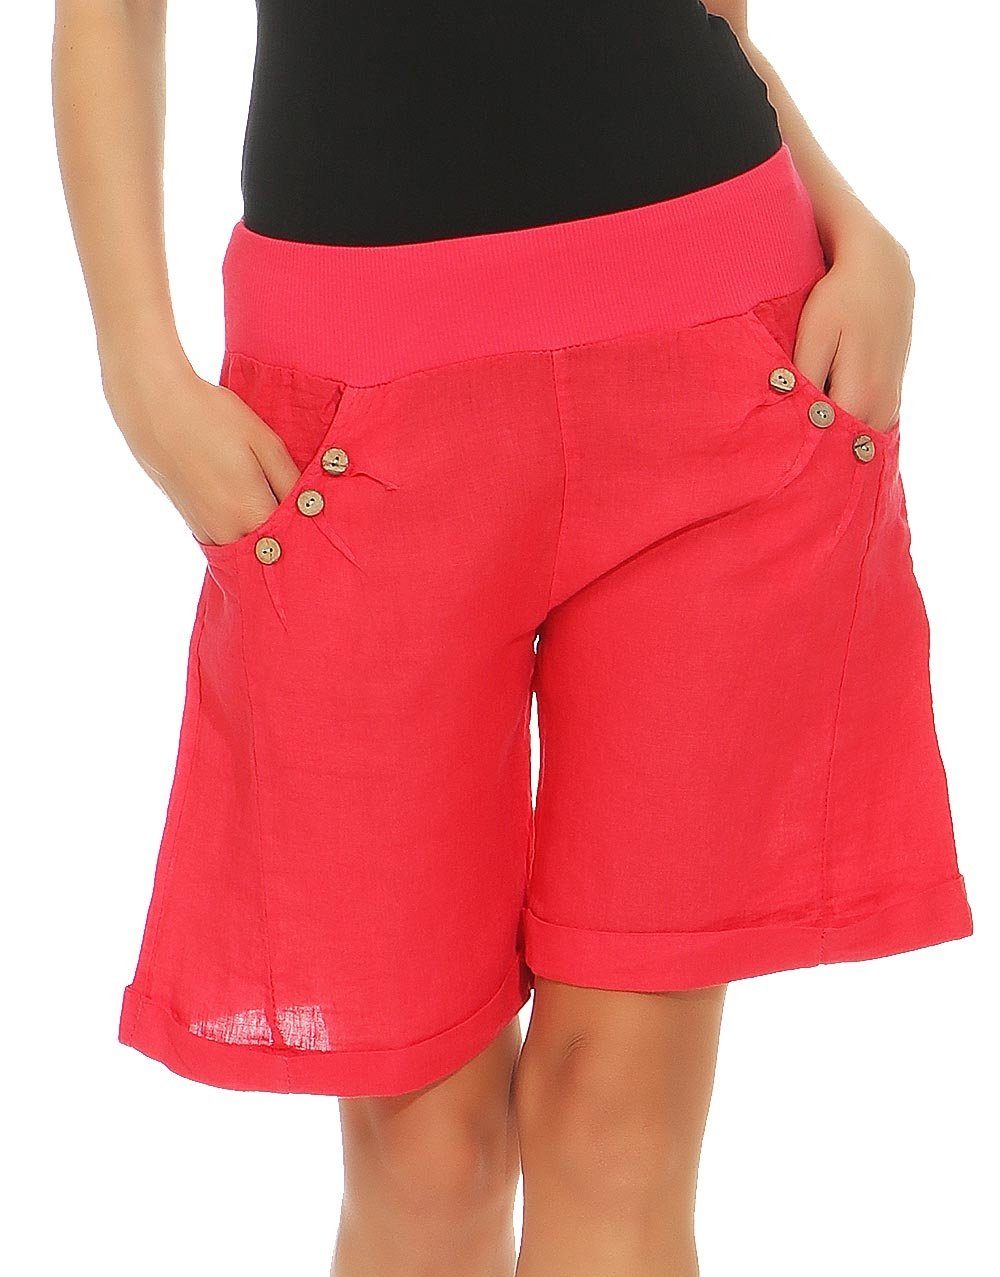 malito more than fashion Leinenhose 8024 Bermuda aus Leinen Shorts pink